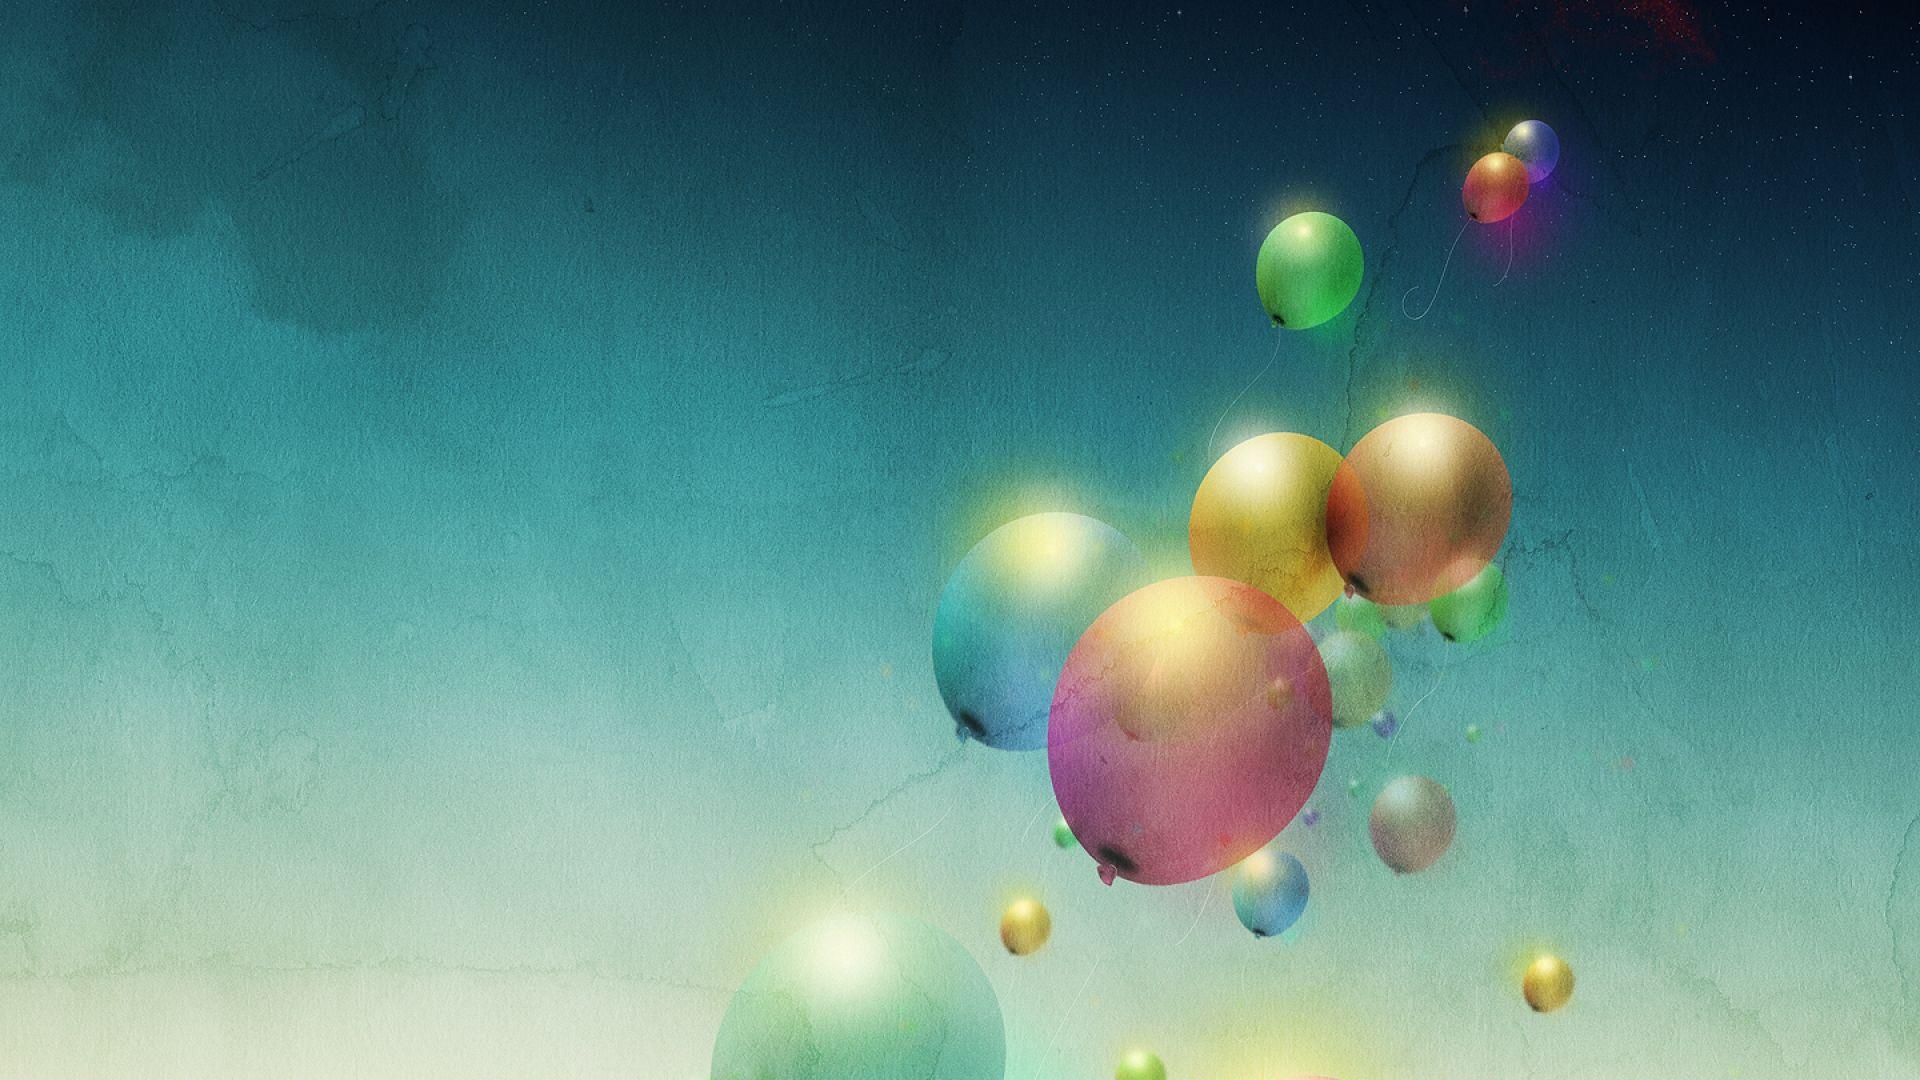 Balloon wallpaper